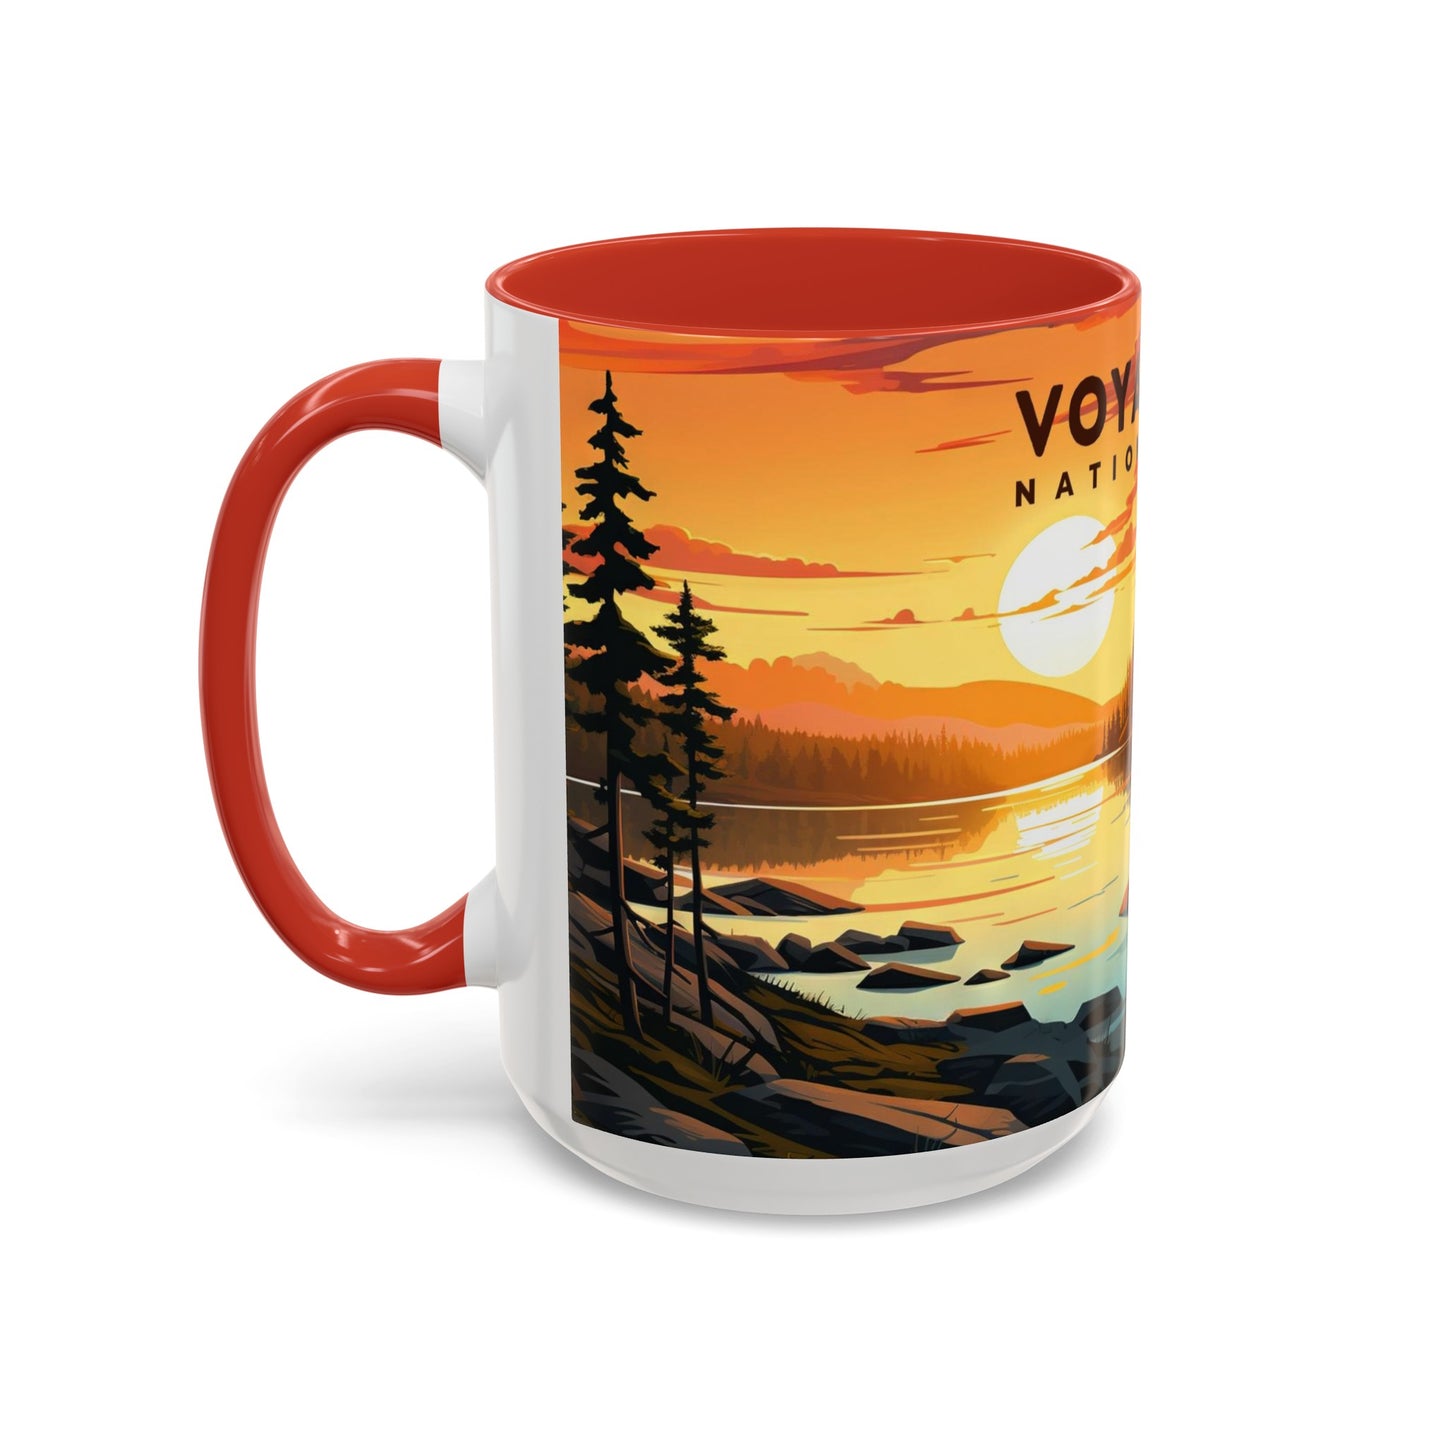 Voyageurs National Park Mug | Accent Coffee Mug (11, 15oz)